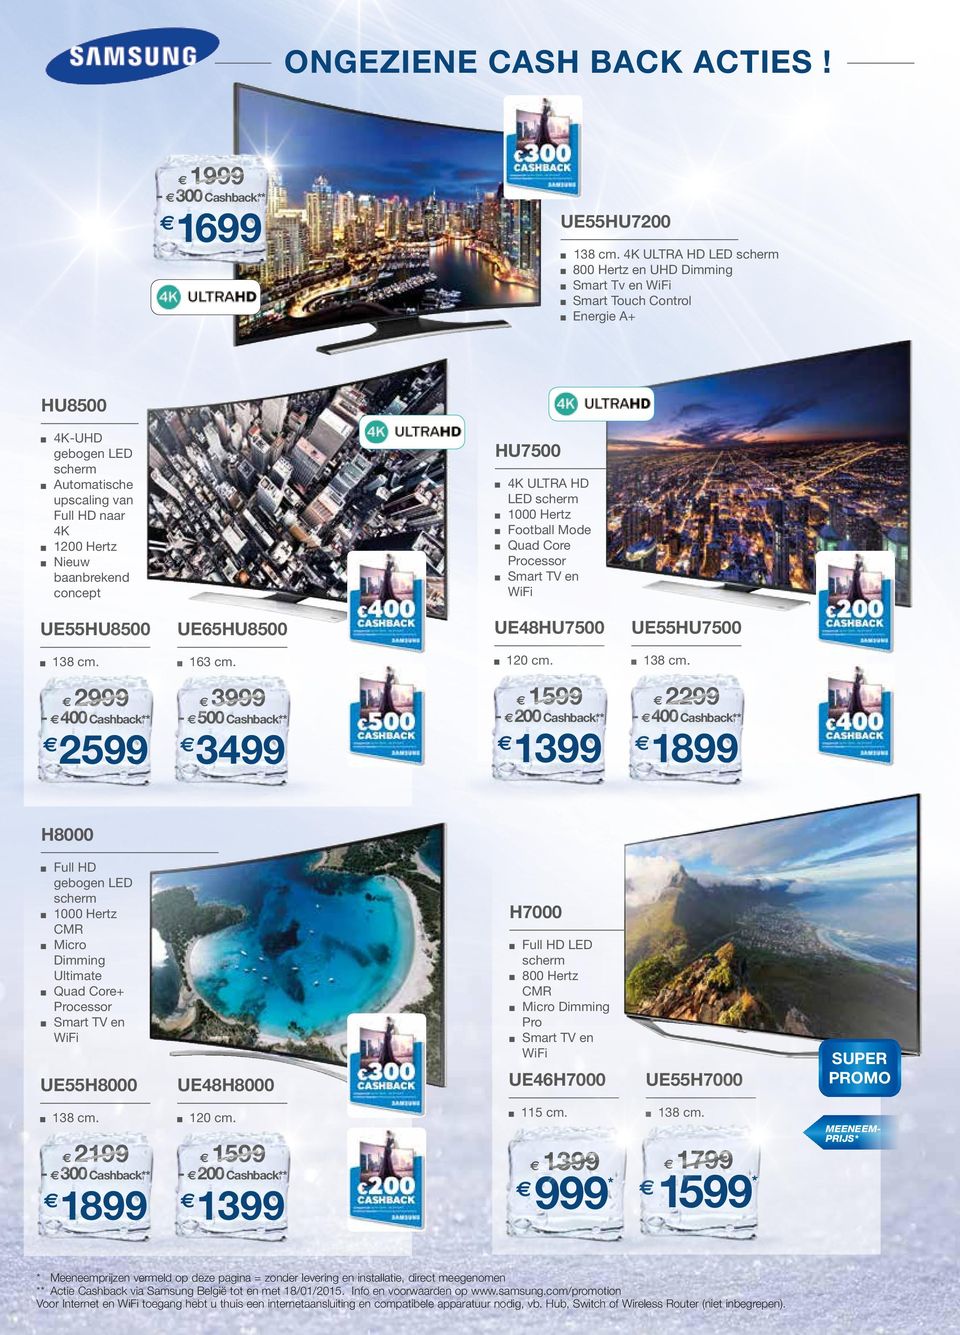 4K ULTRA HD LED scherm 1000 Hertz Football Mode Quad Core Processor Smart TV en WiFi UE55HU8500 UE65HU8500 UE48HU7500 UE55HU7500 138 cm.